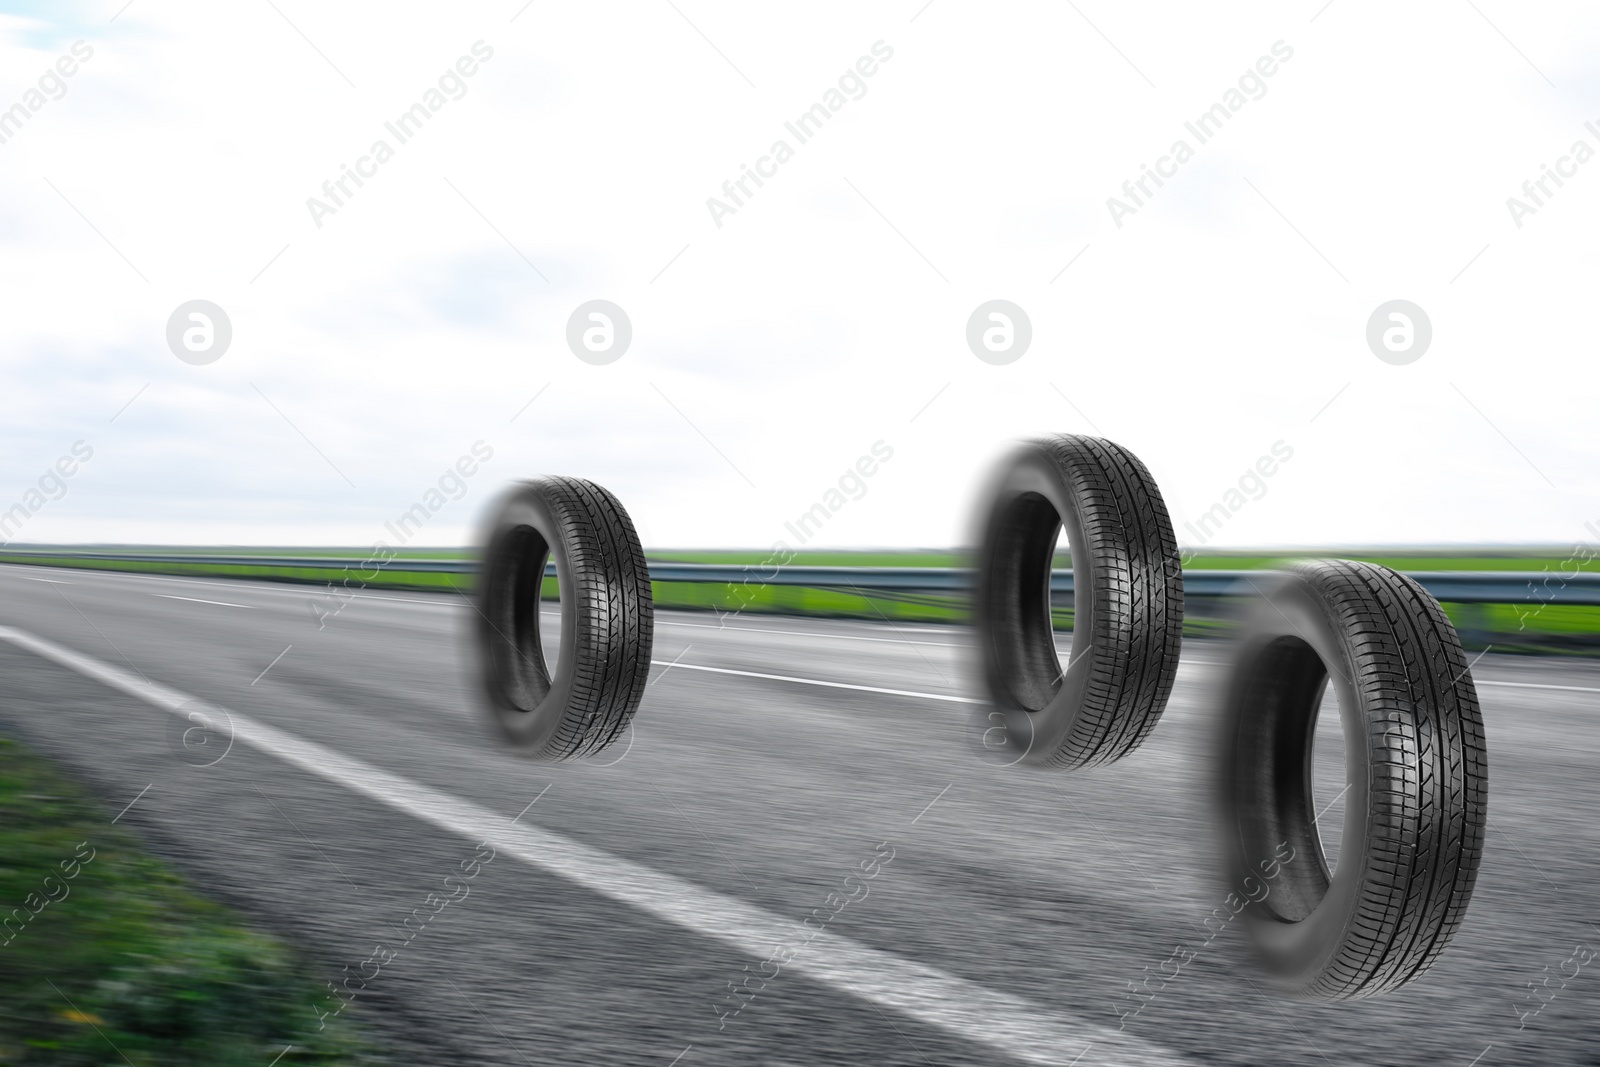 Image of Car tires rolling on asphalt highway outdoors